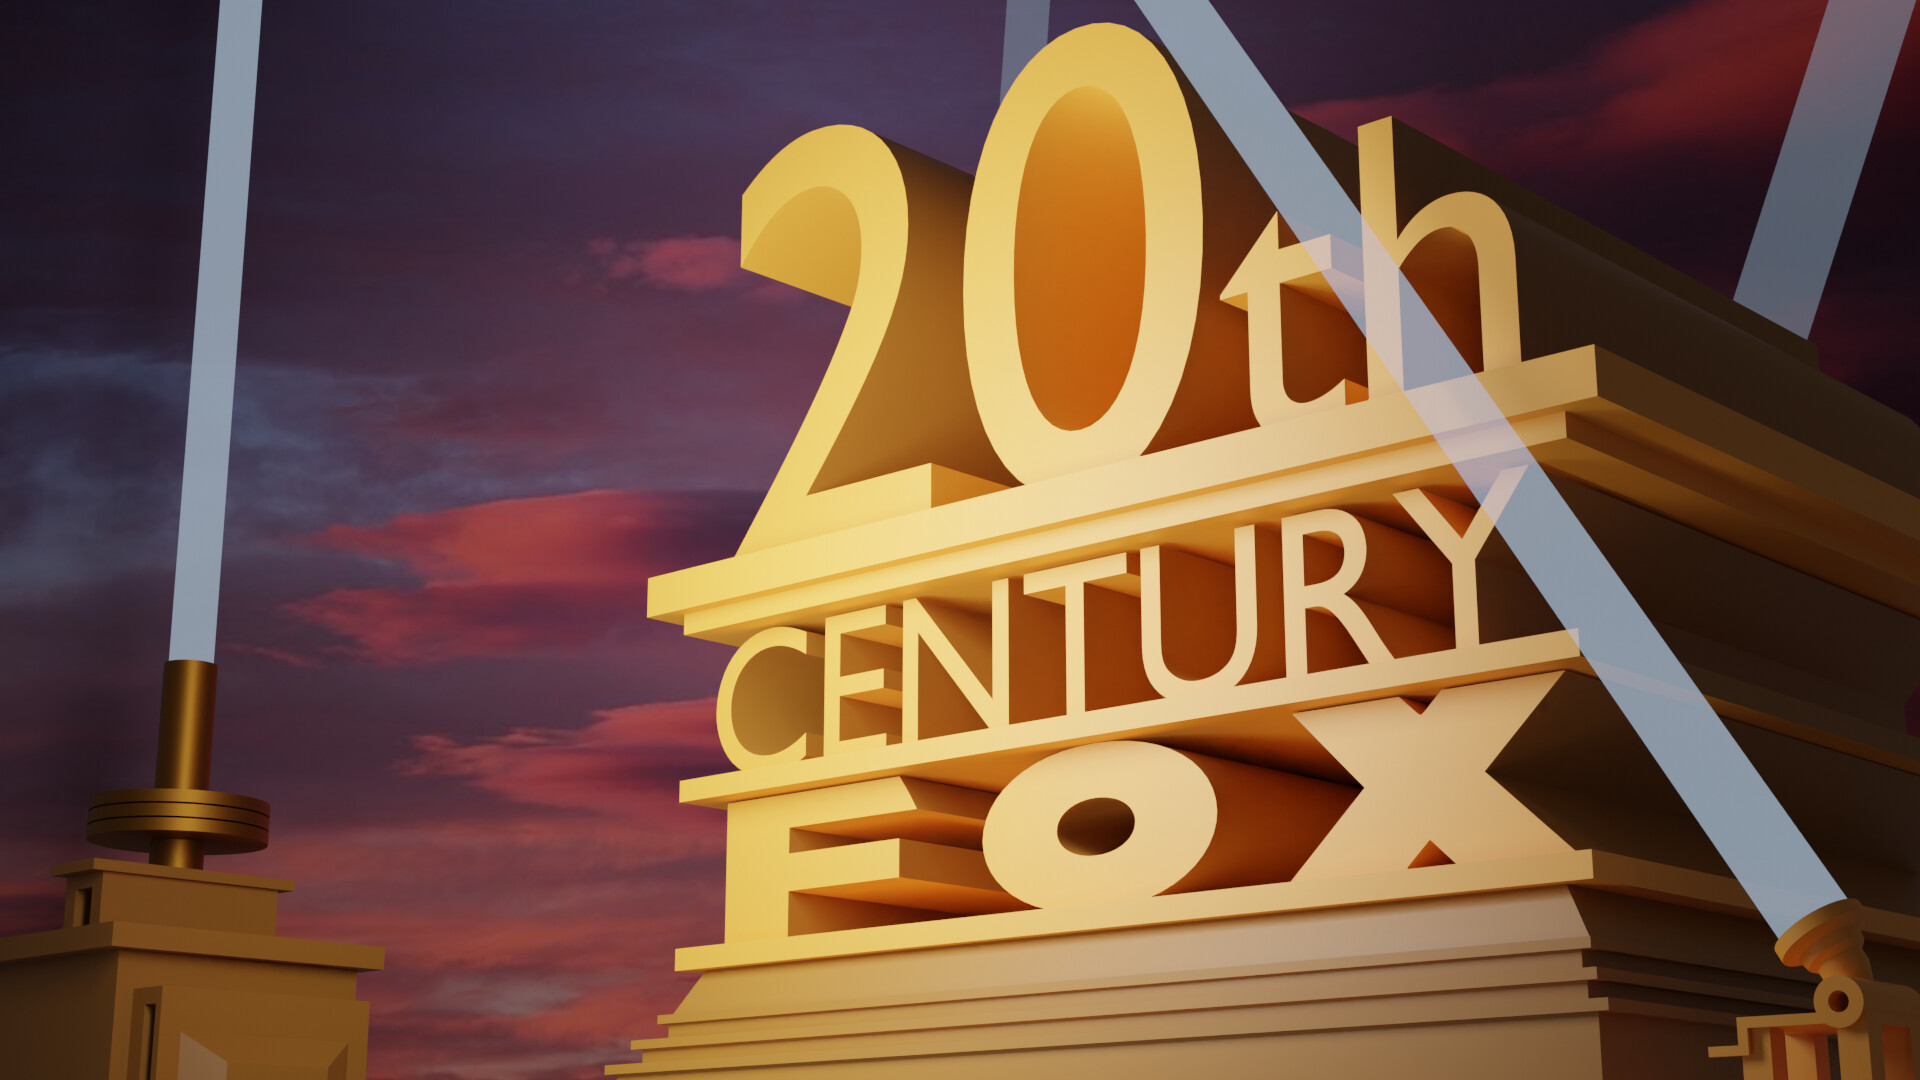 20 century fox intro maker